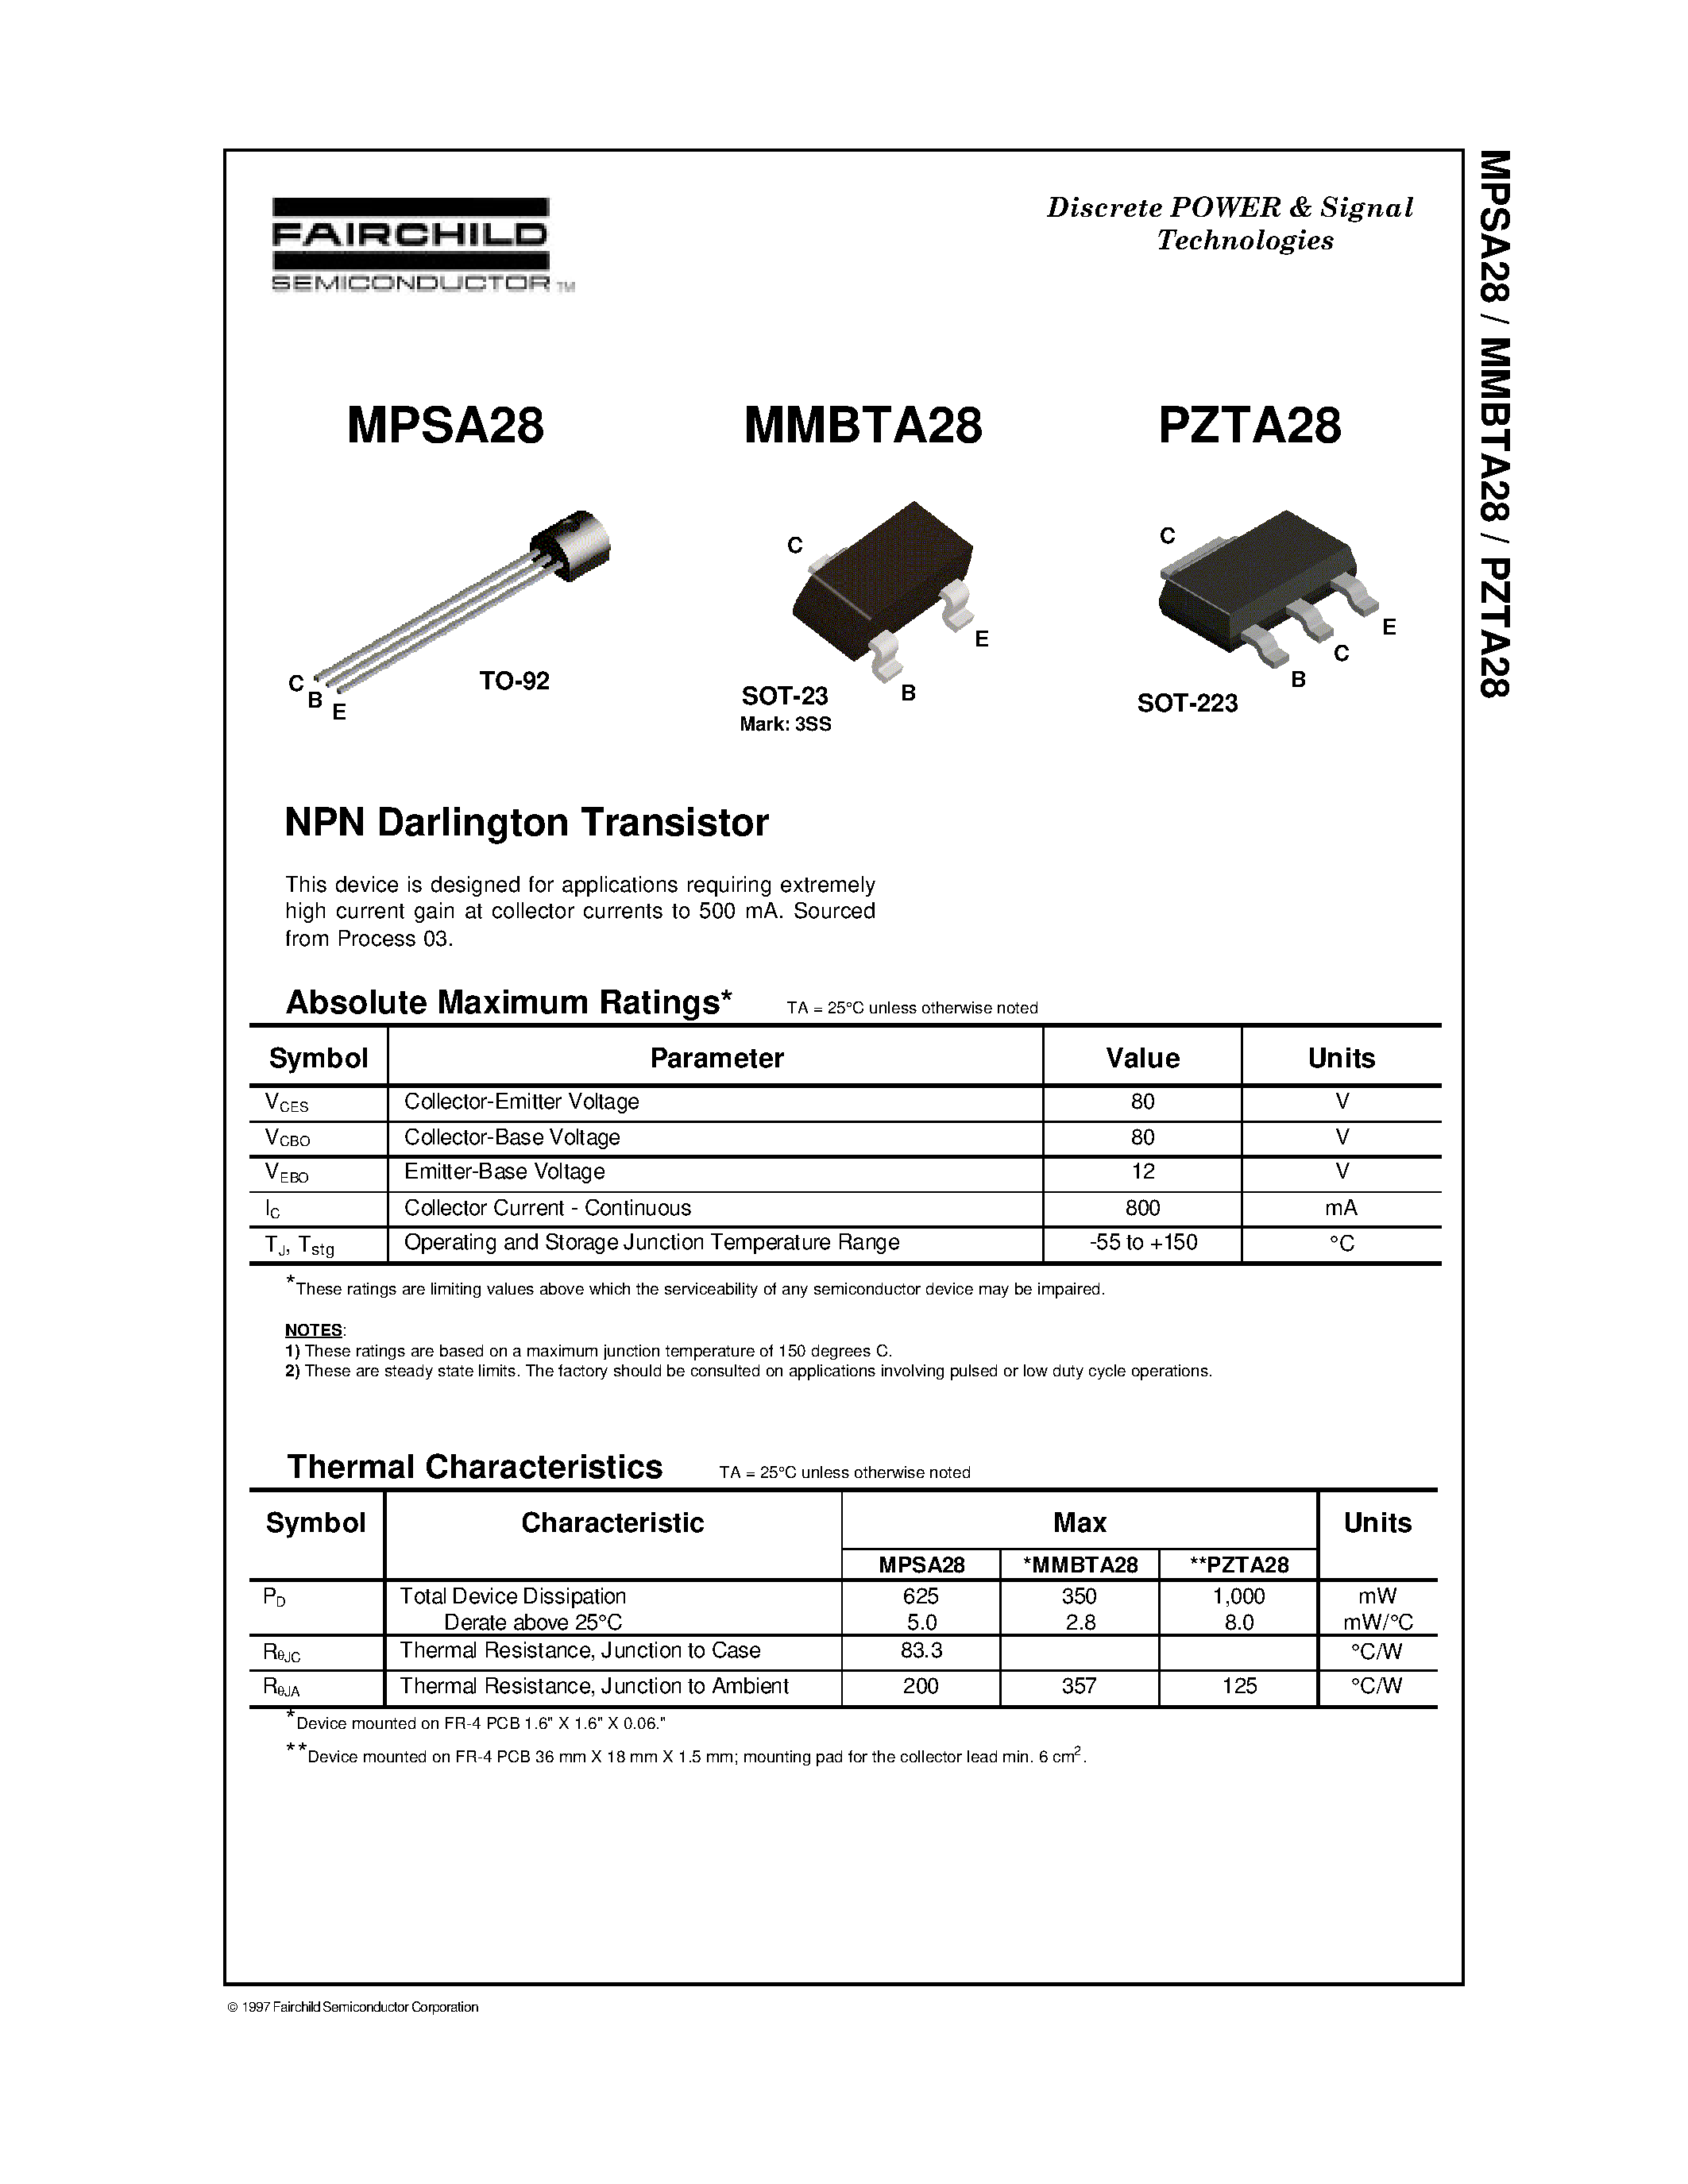 Datasheet PZTA28 - NPN Darlington Transistor page 1